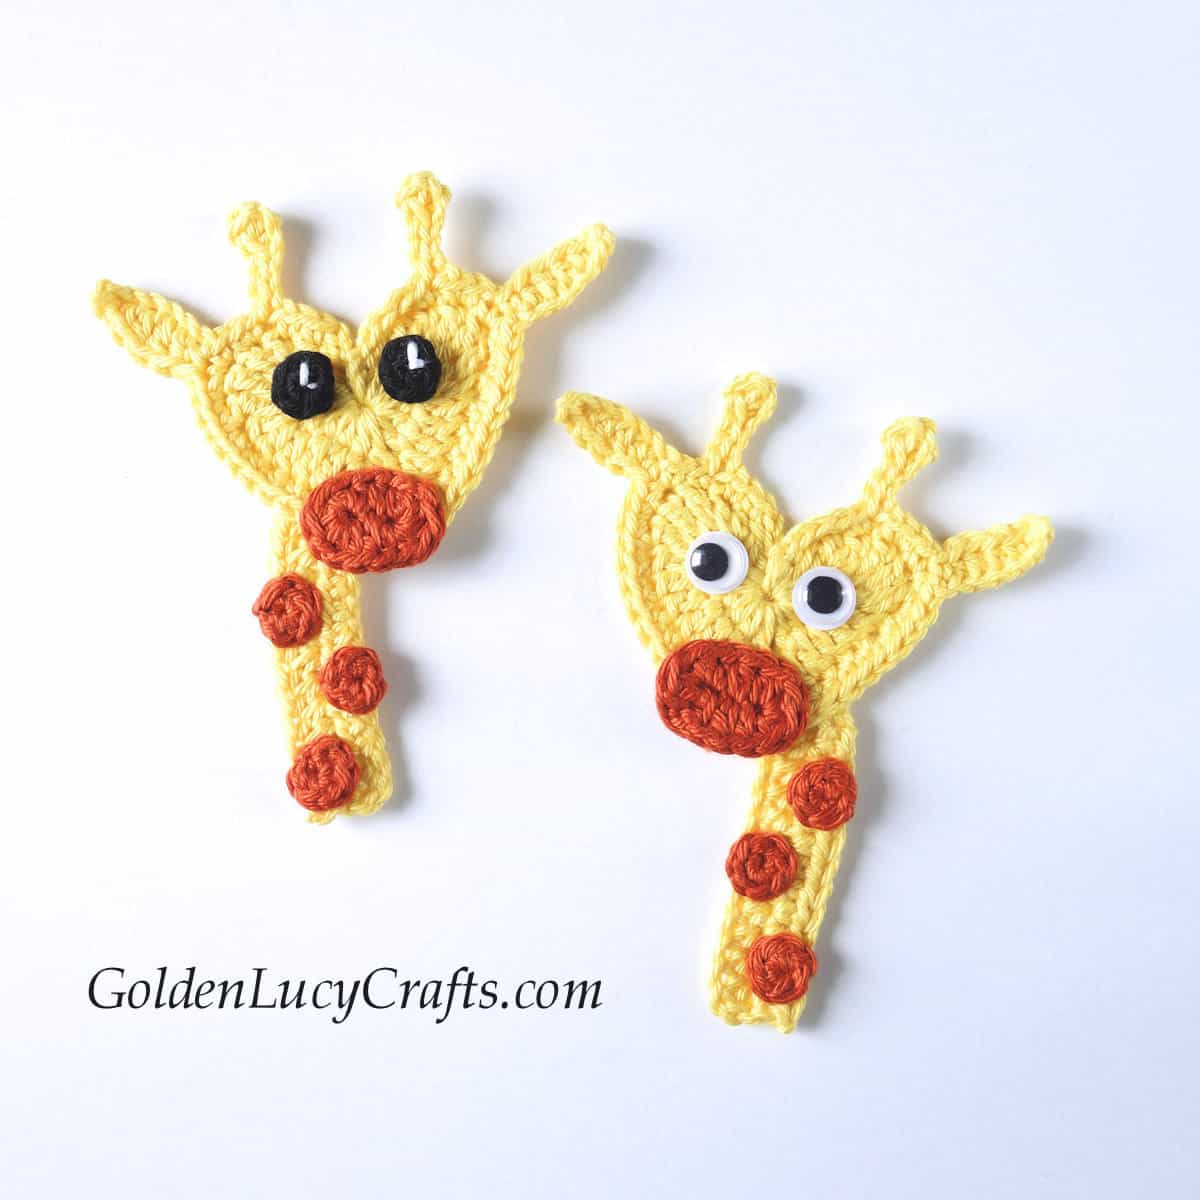 Two crocheted heart-shaped giraffes.